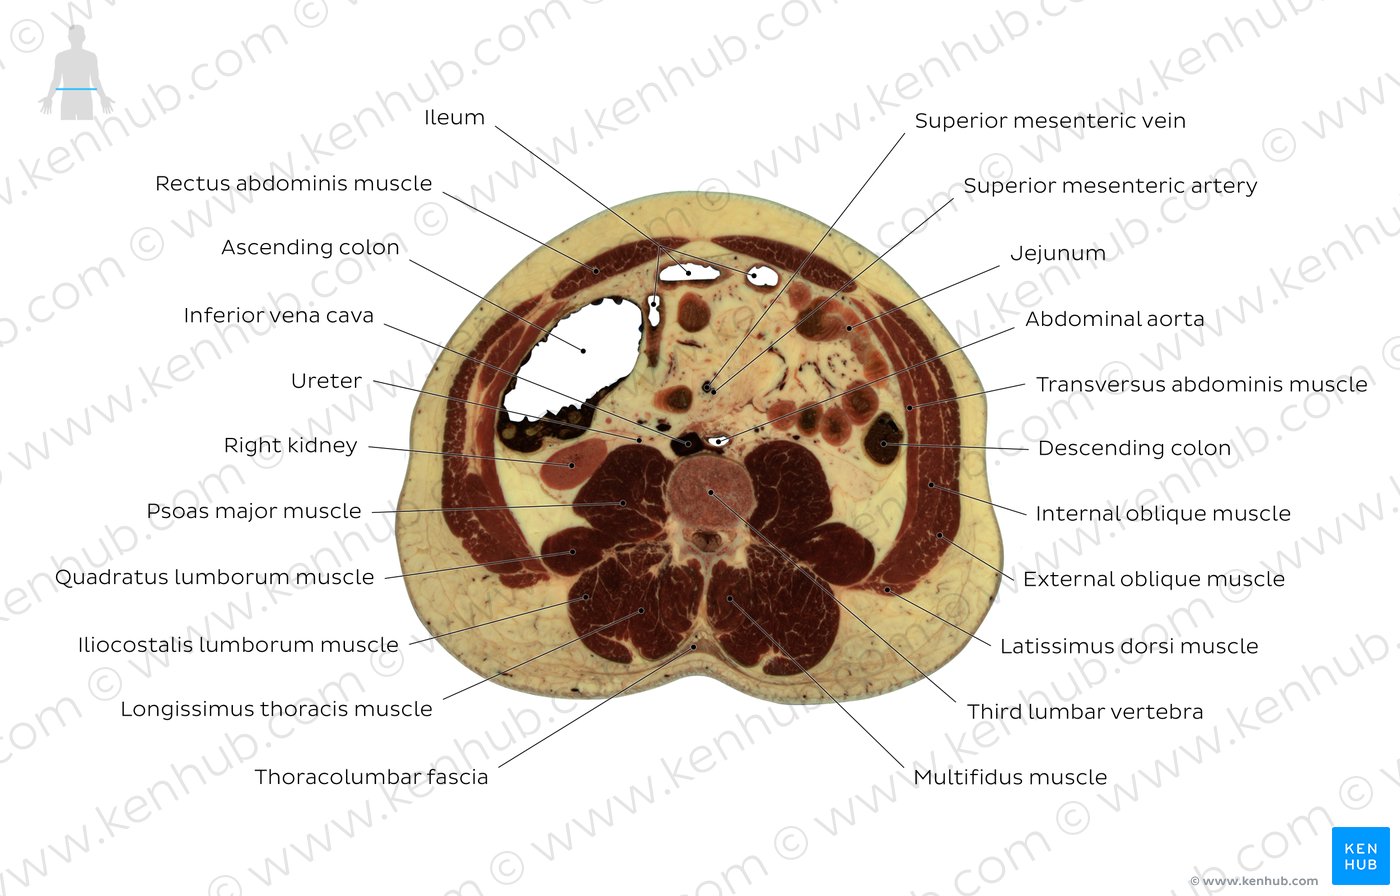 Third lumbar vertebra level: Overview